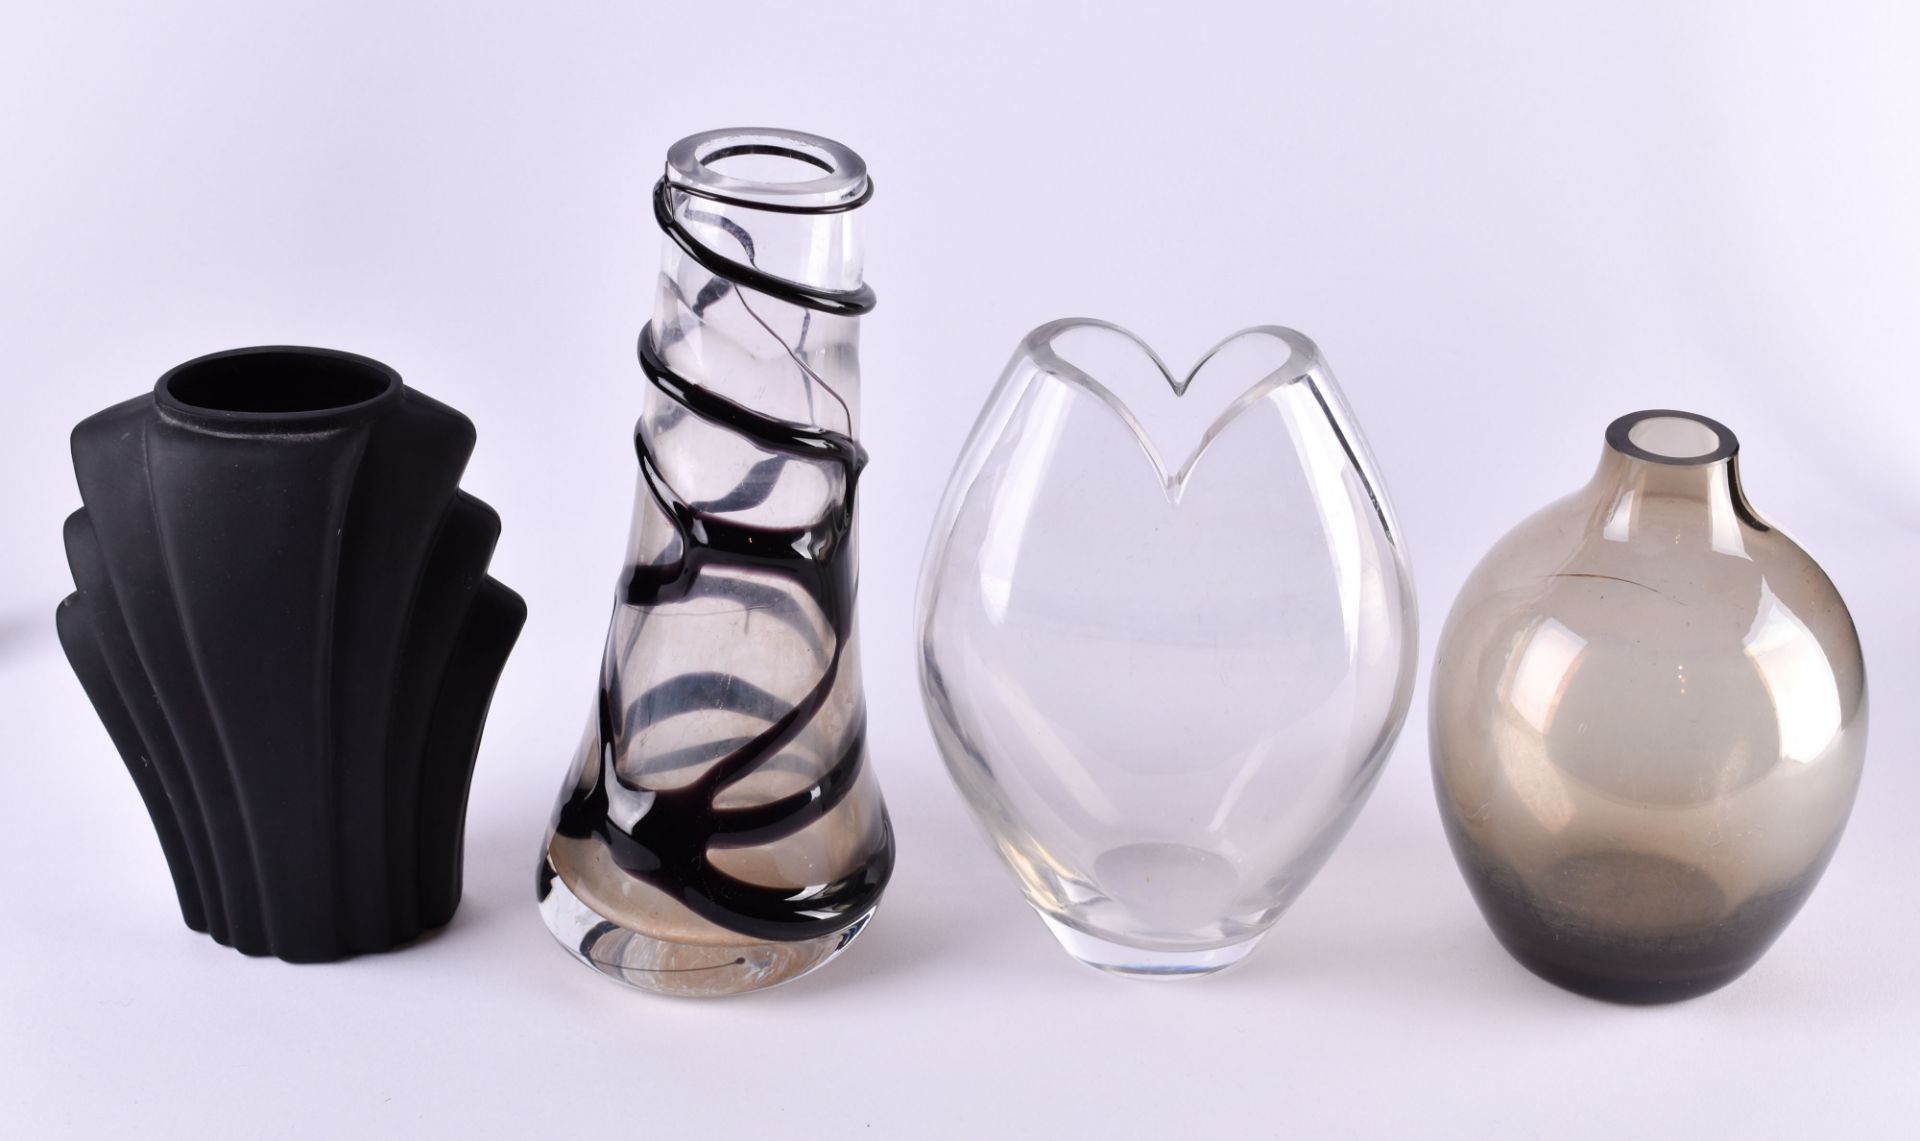 Group of glass designer vases 60s - 70s - Image 2 of 2